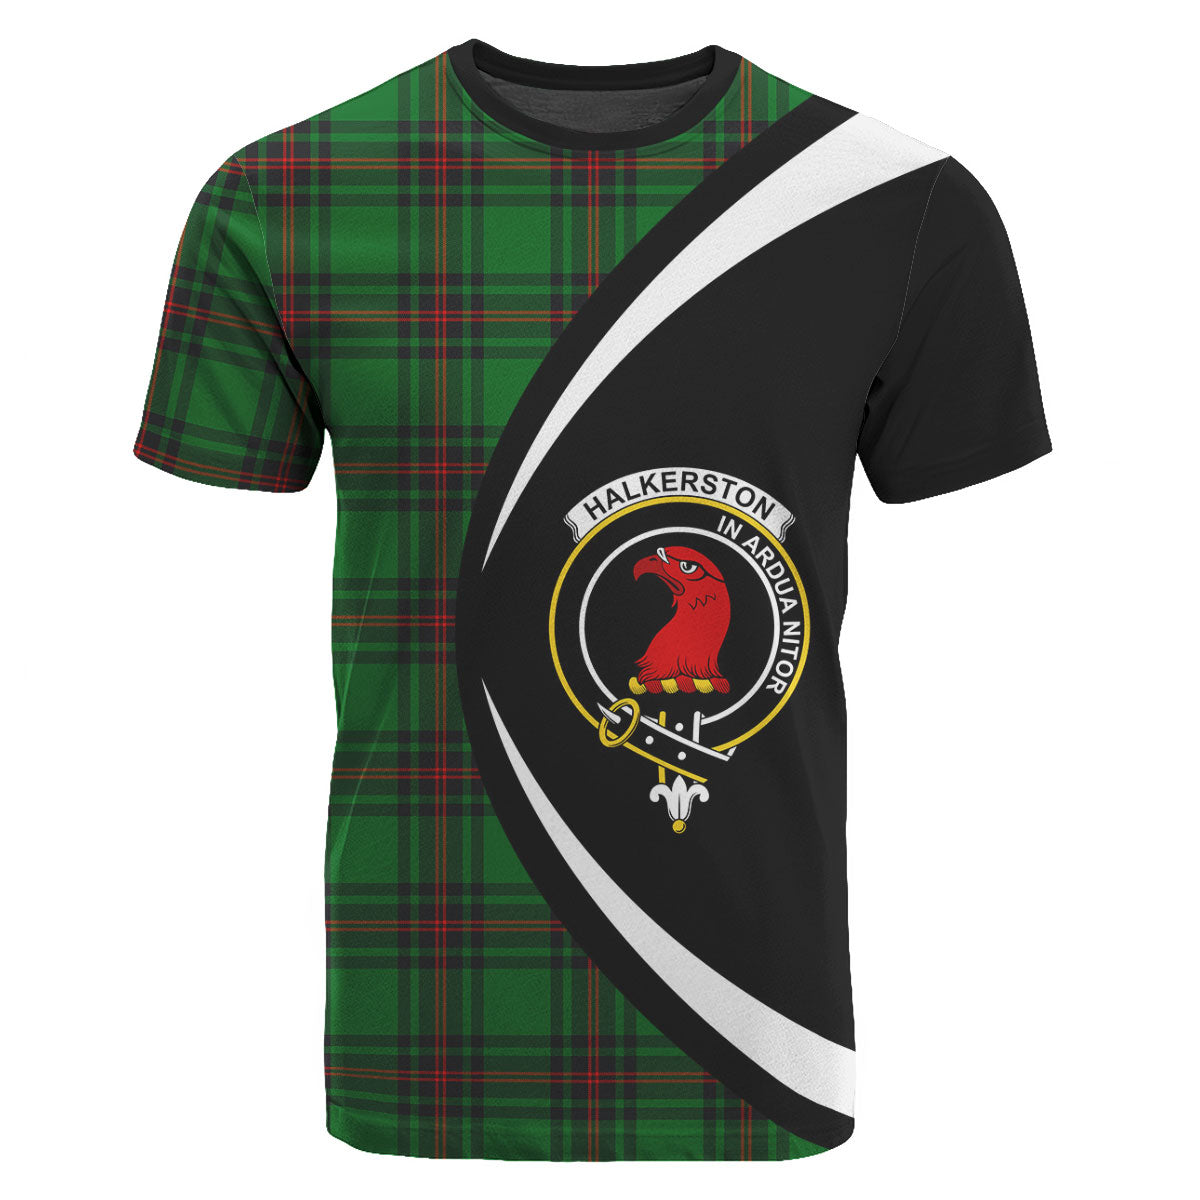 Halkerston Tartan Crest T-shirt - Circle Style